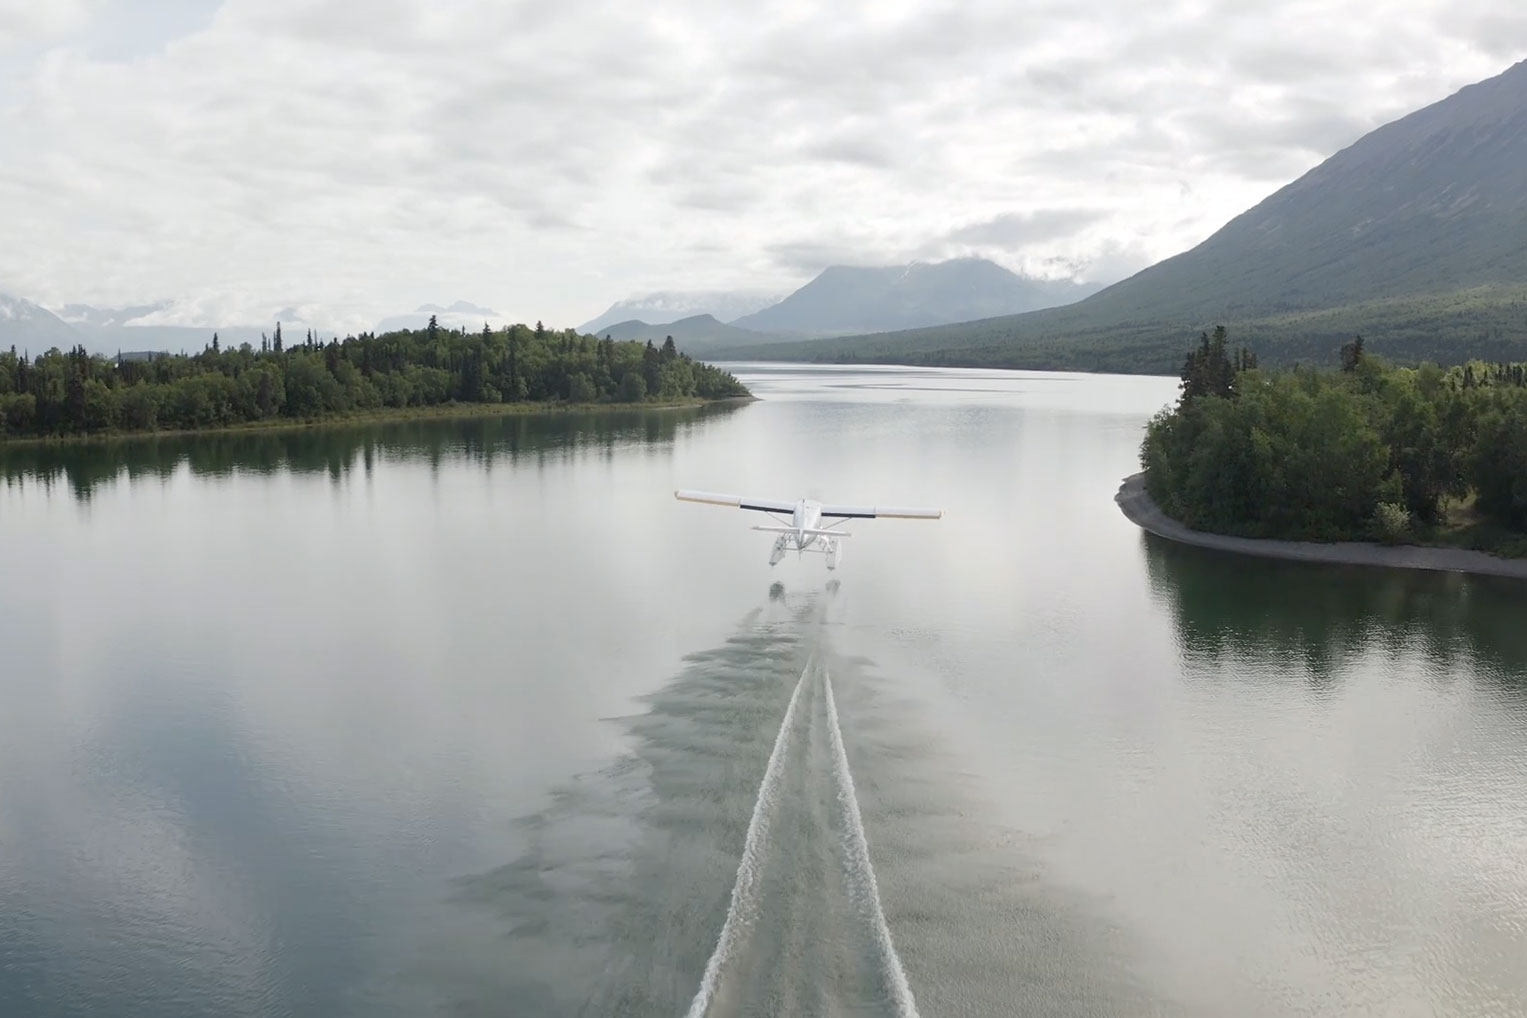 The Otter floatplane takes off for a morning flight across the Lake Clark wilderness.